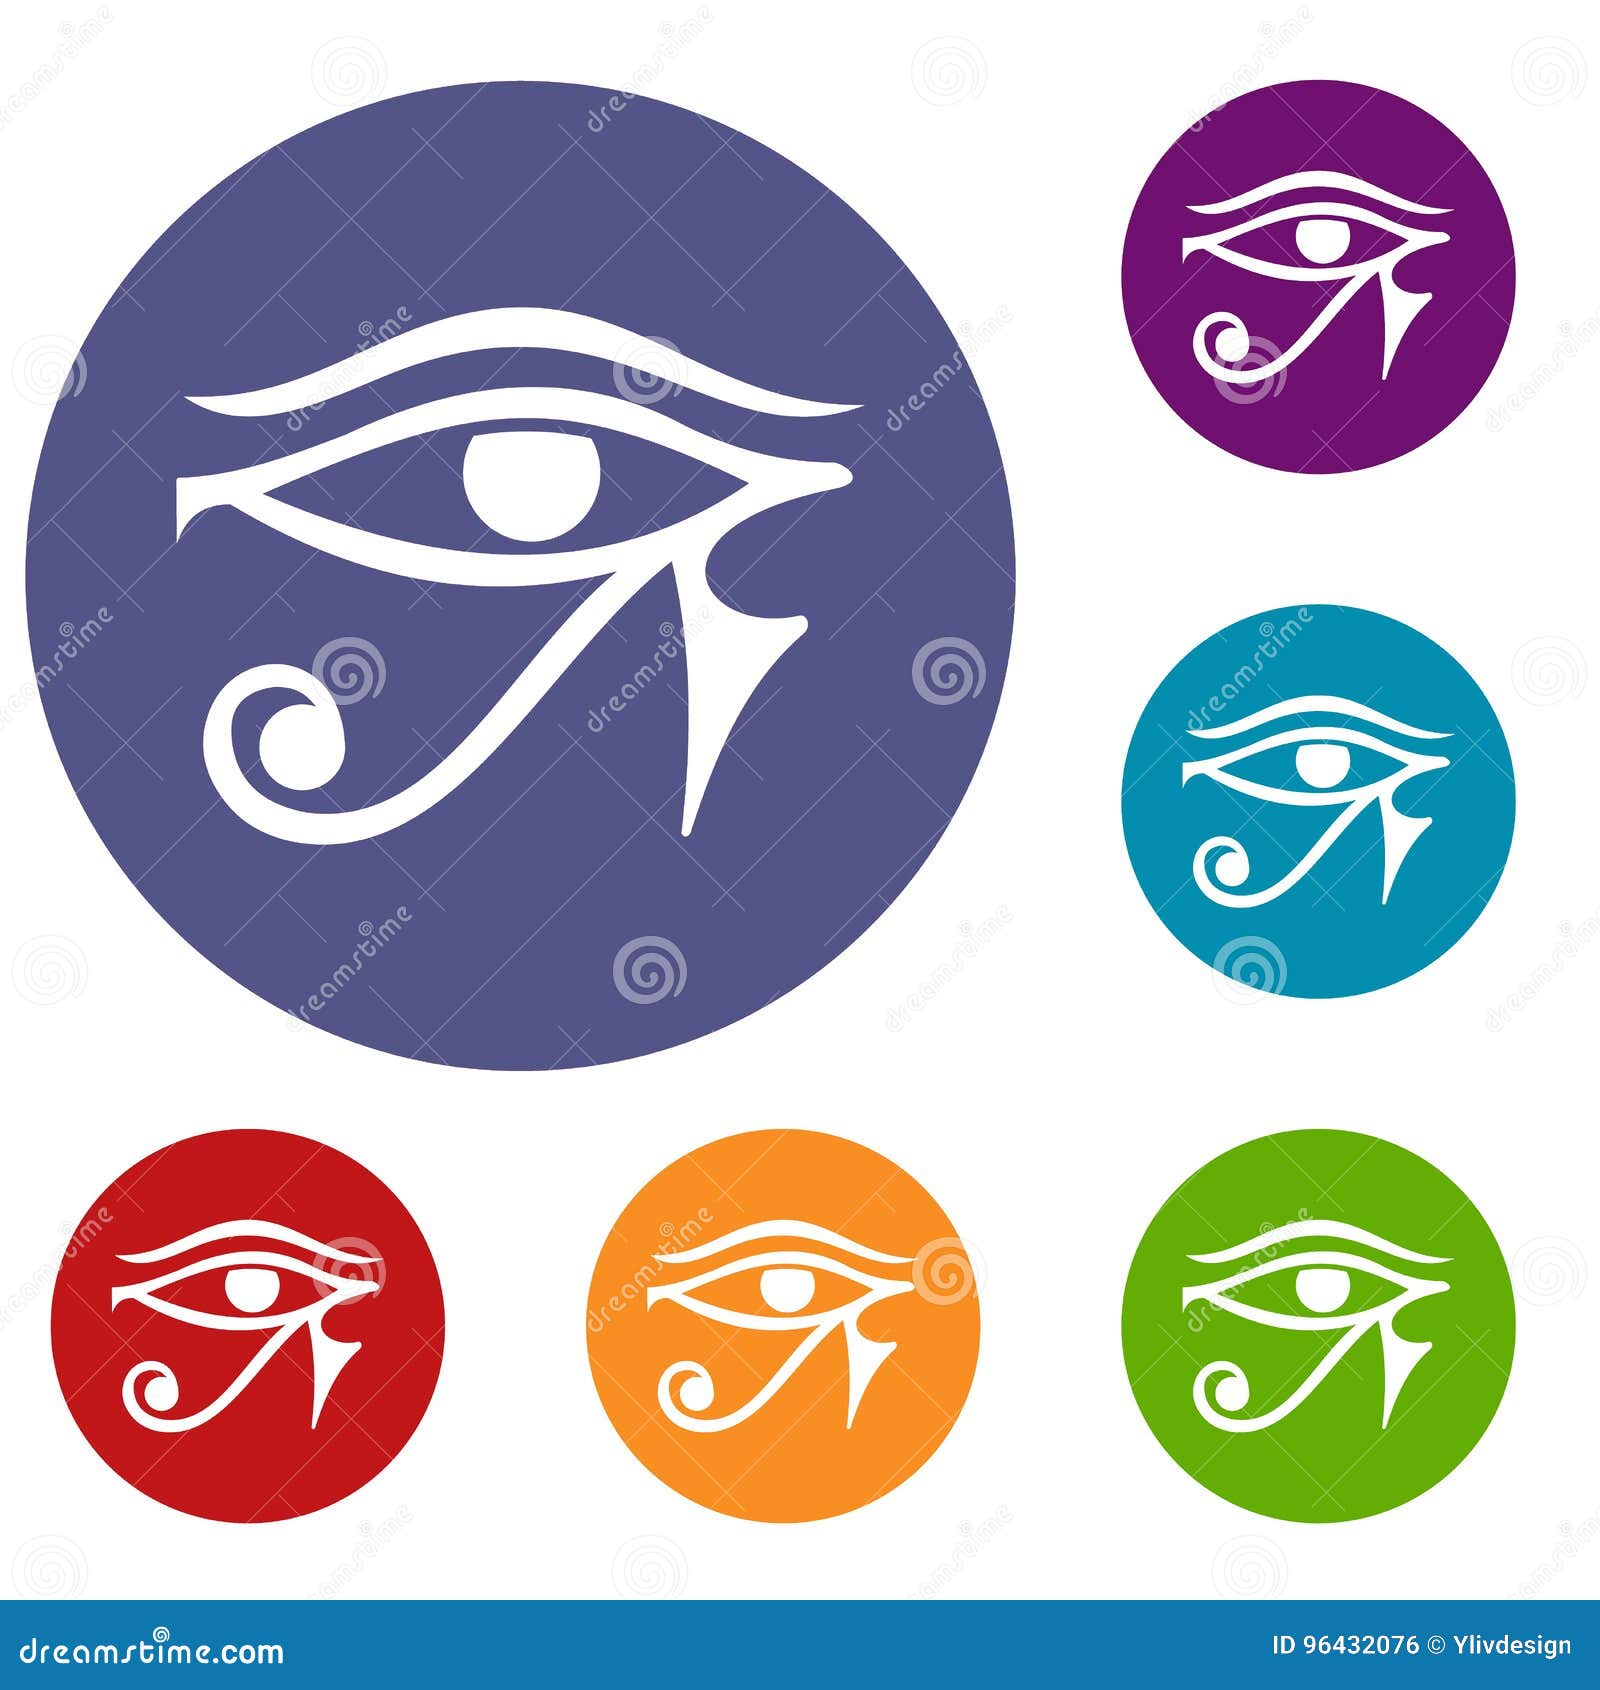 Eye Of Horus Egypt Deity Icons Set Stock Vector Illustration Of Collection Blue 96432076